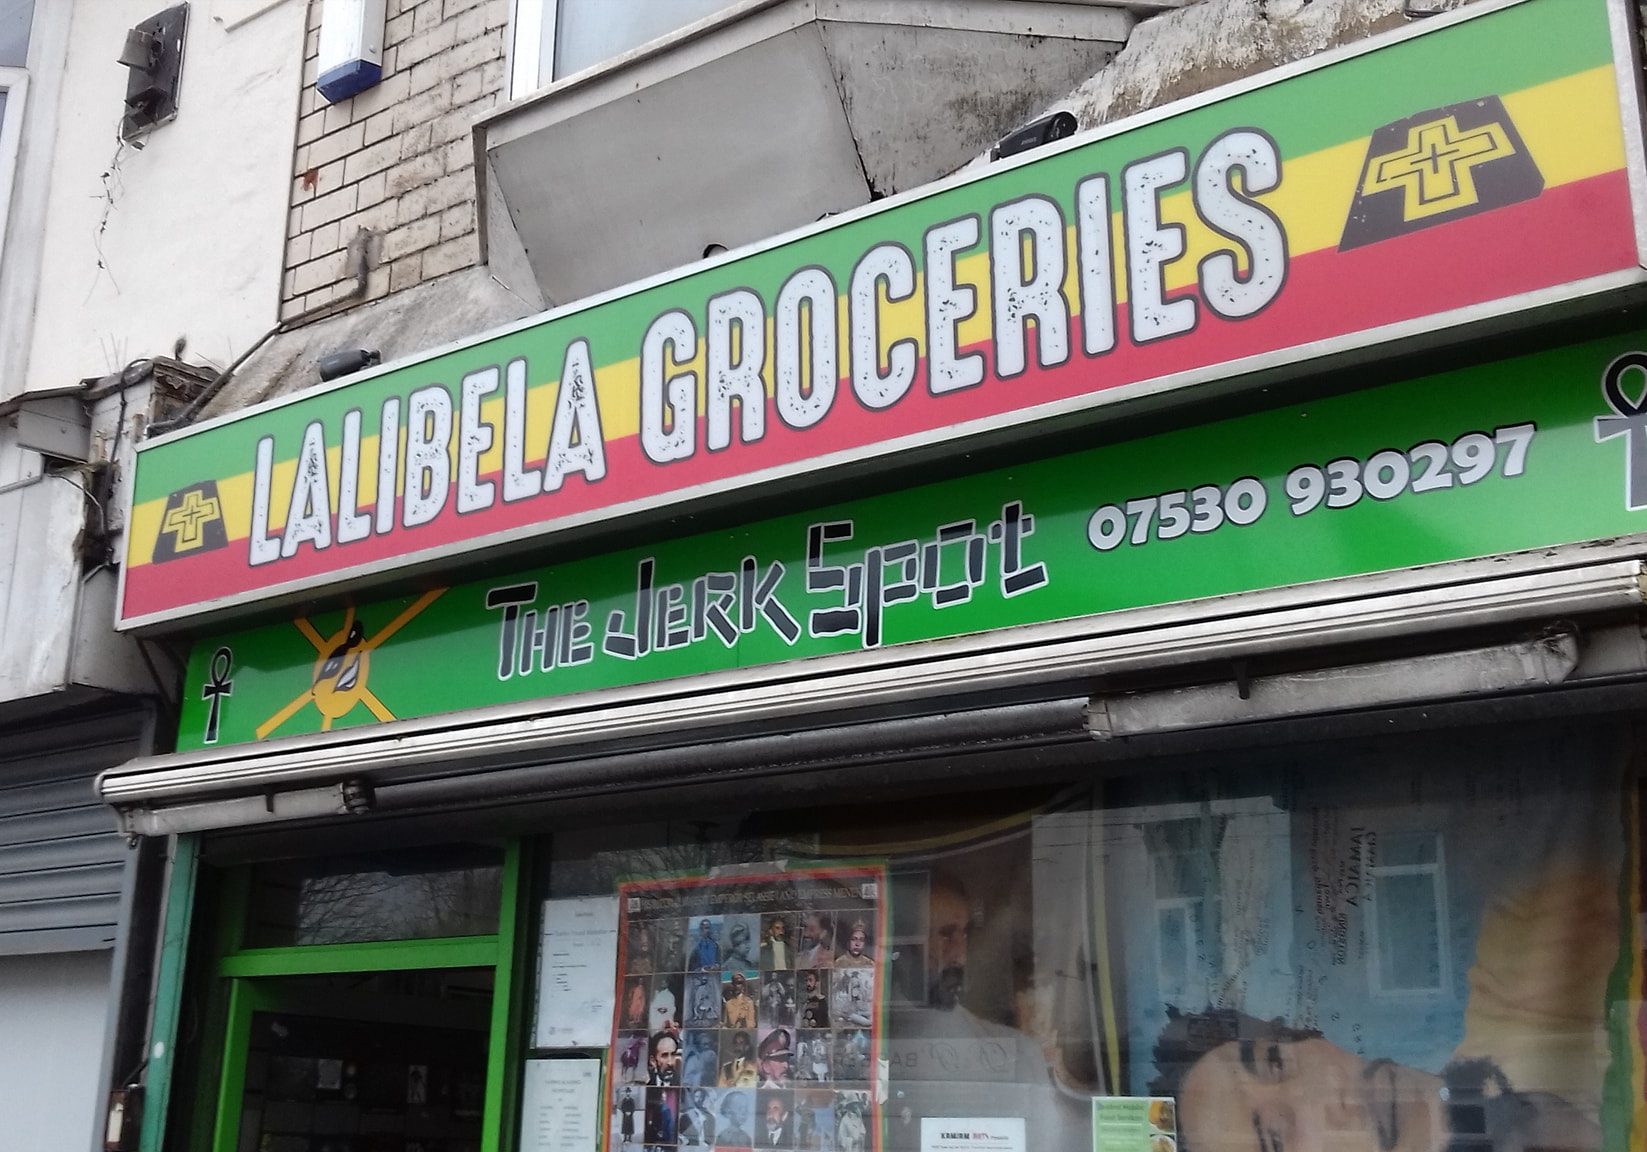 Lalibela Groceries shop sign